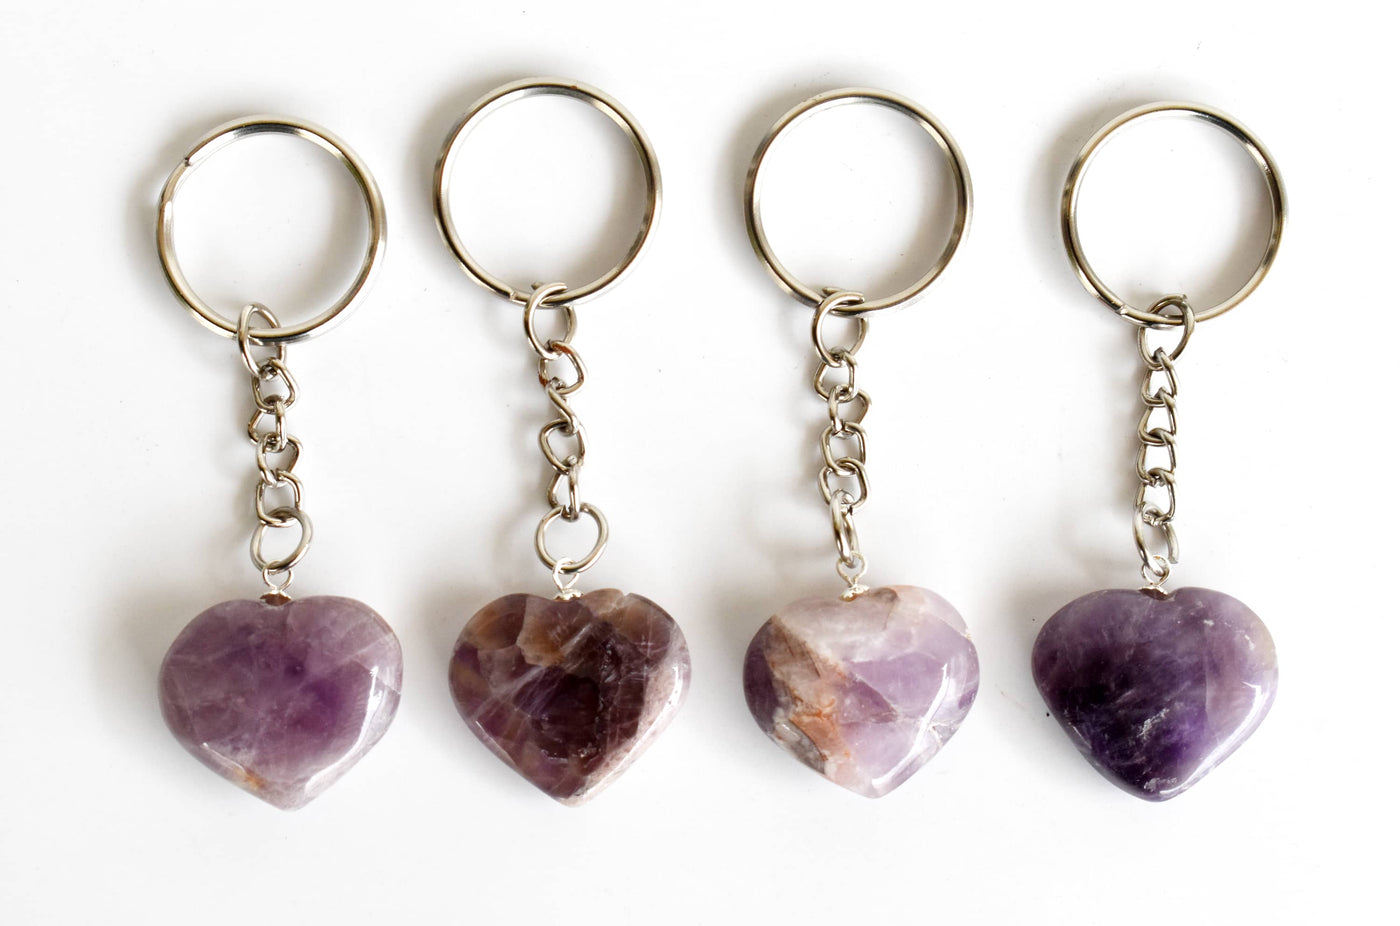 Amethyst Key Chain, Gemstone Keychain Crystal Key Ring (Intuition and Grief)